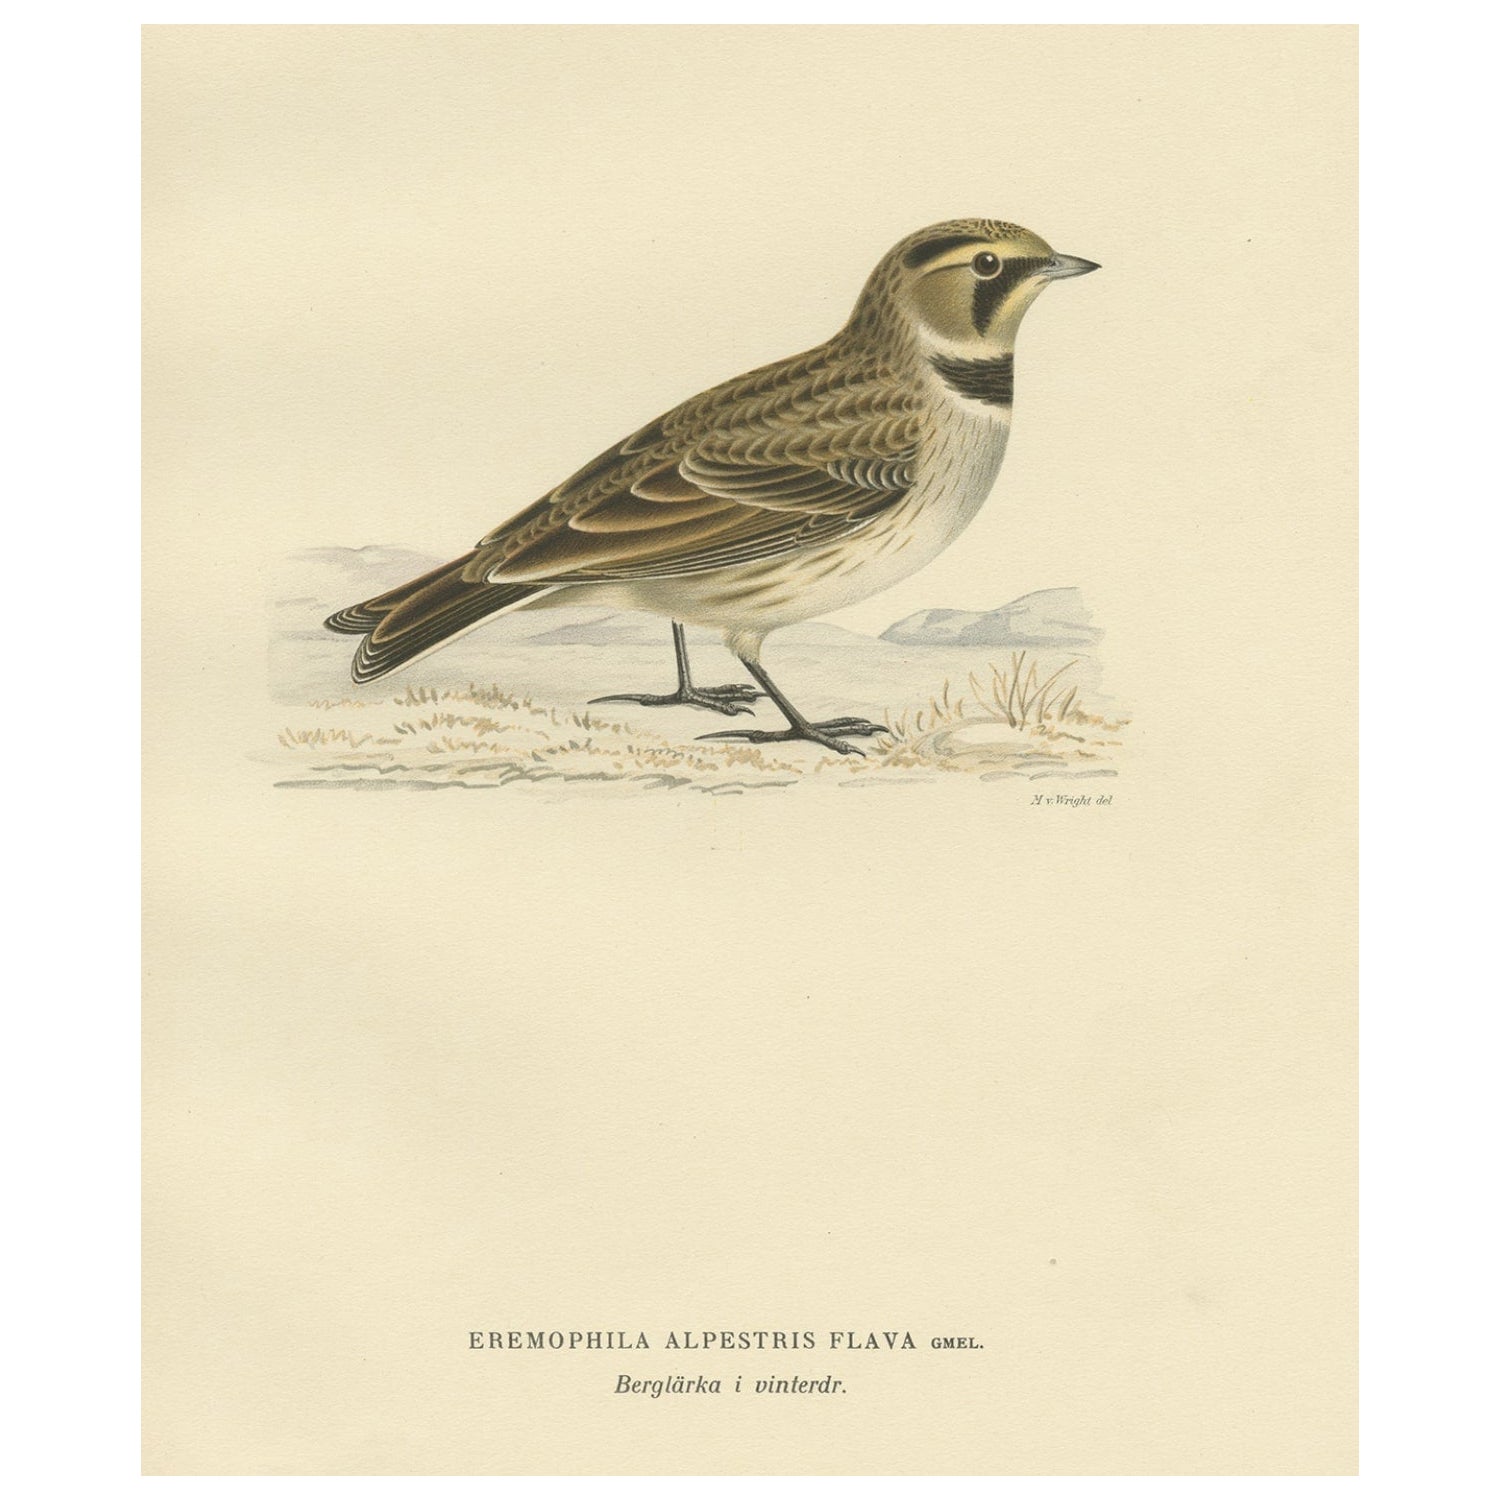 Decorative Old Bird Print of the Common Horned Lark, 1927